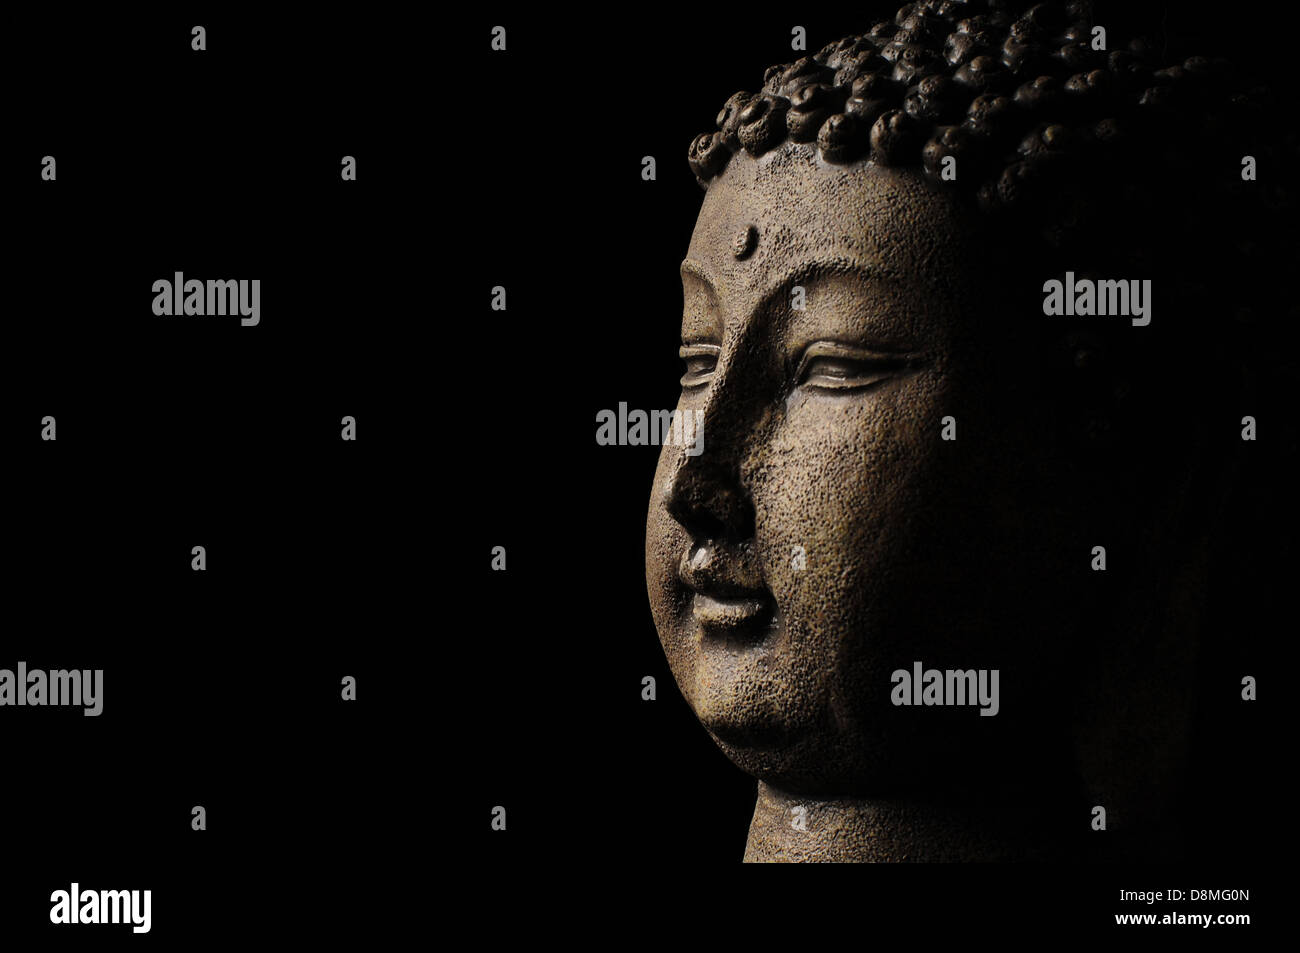 Symbol of Eastern religion on black background Stock Photo